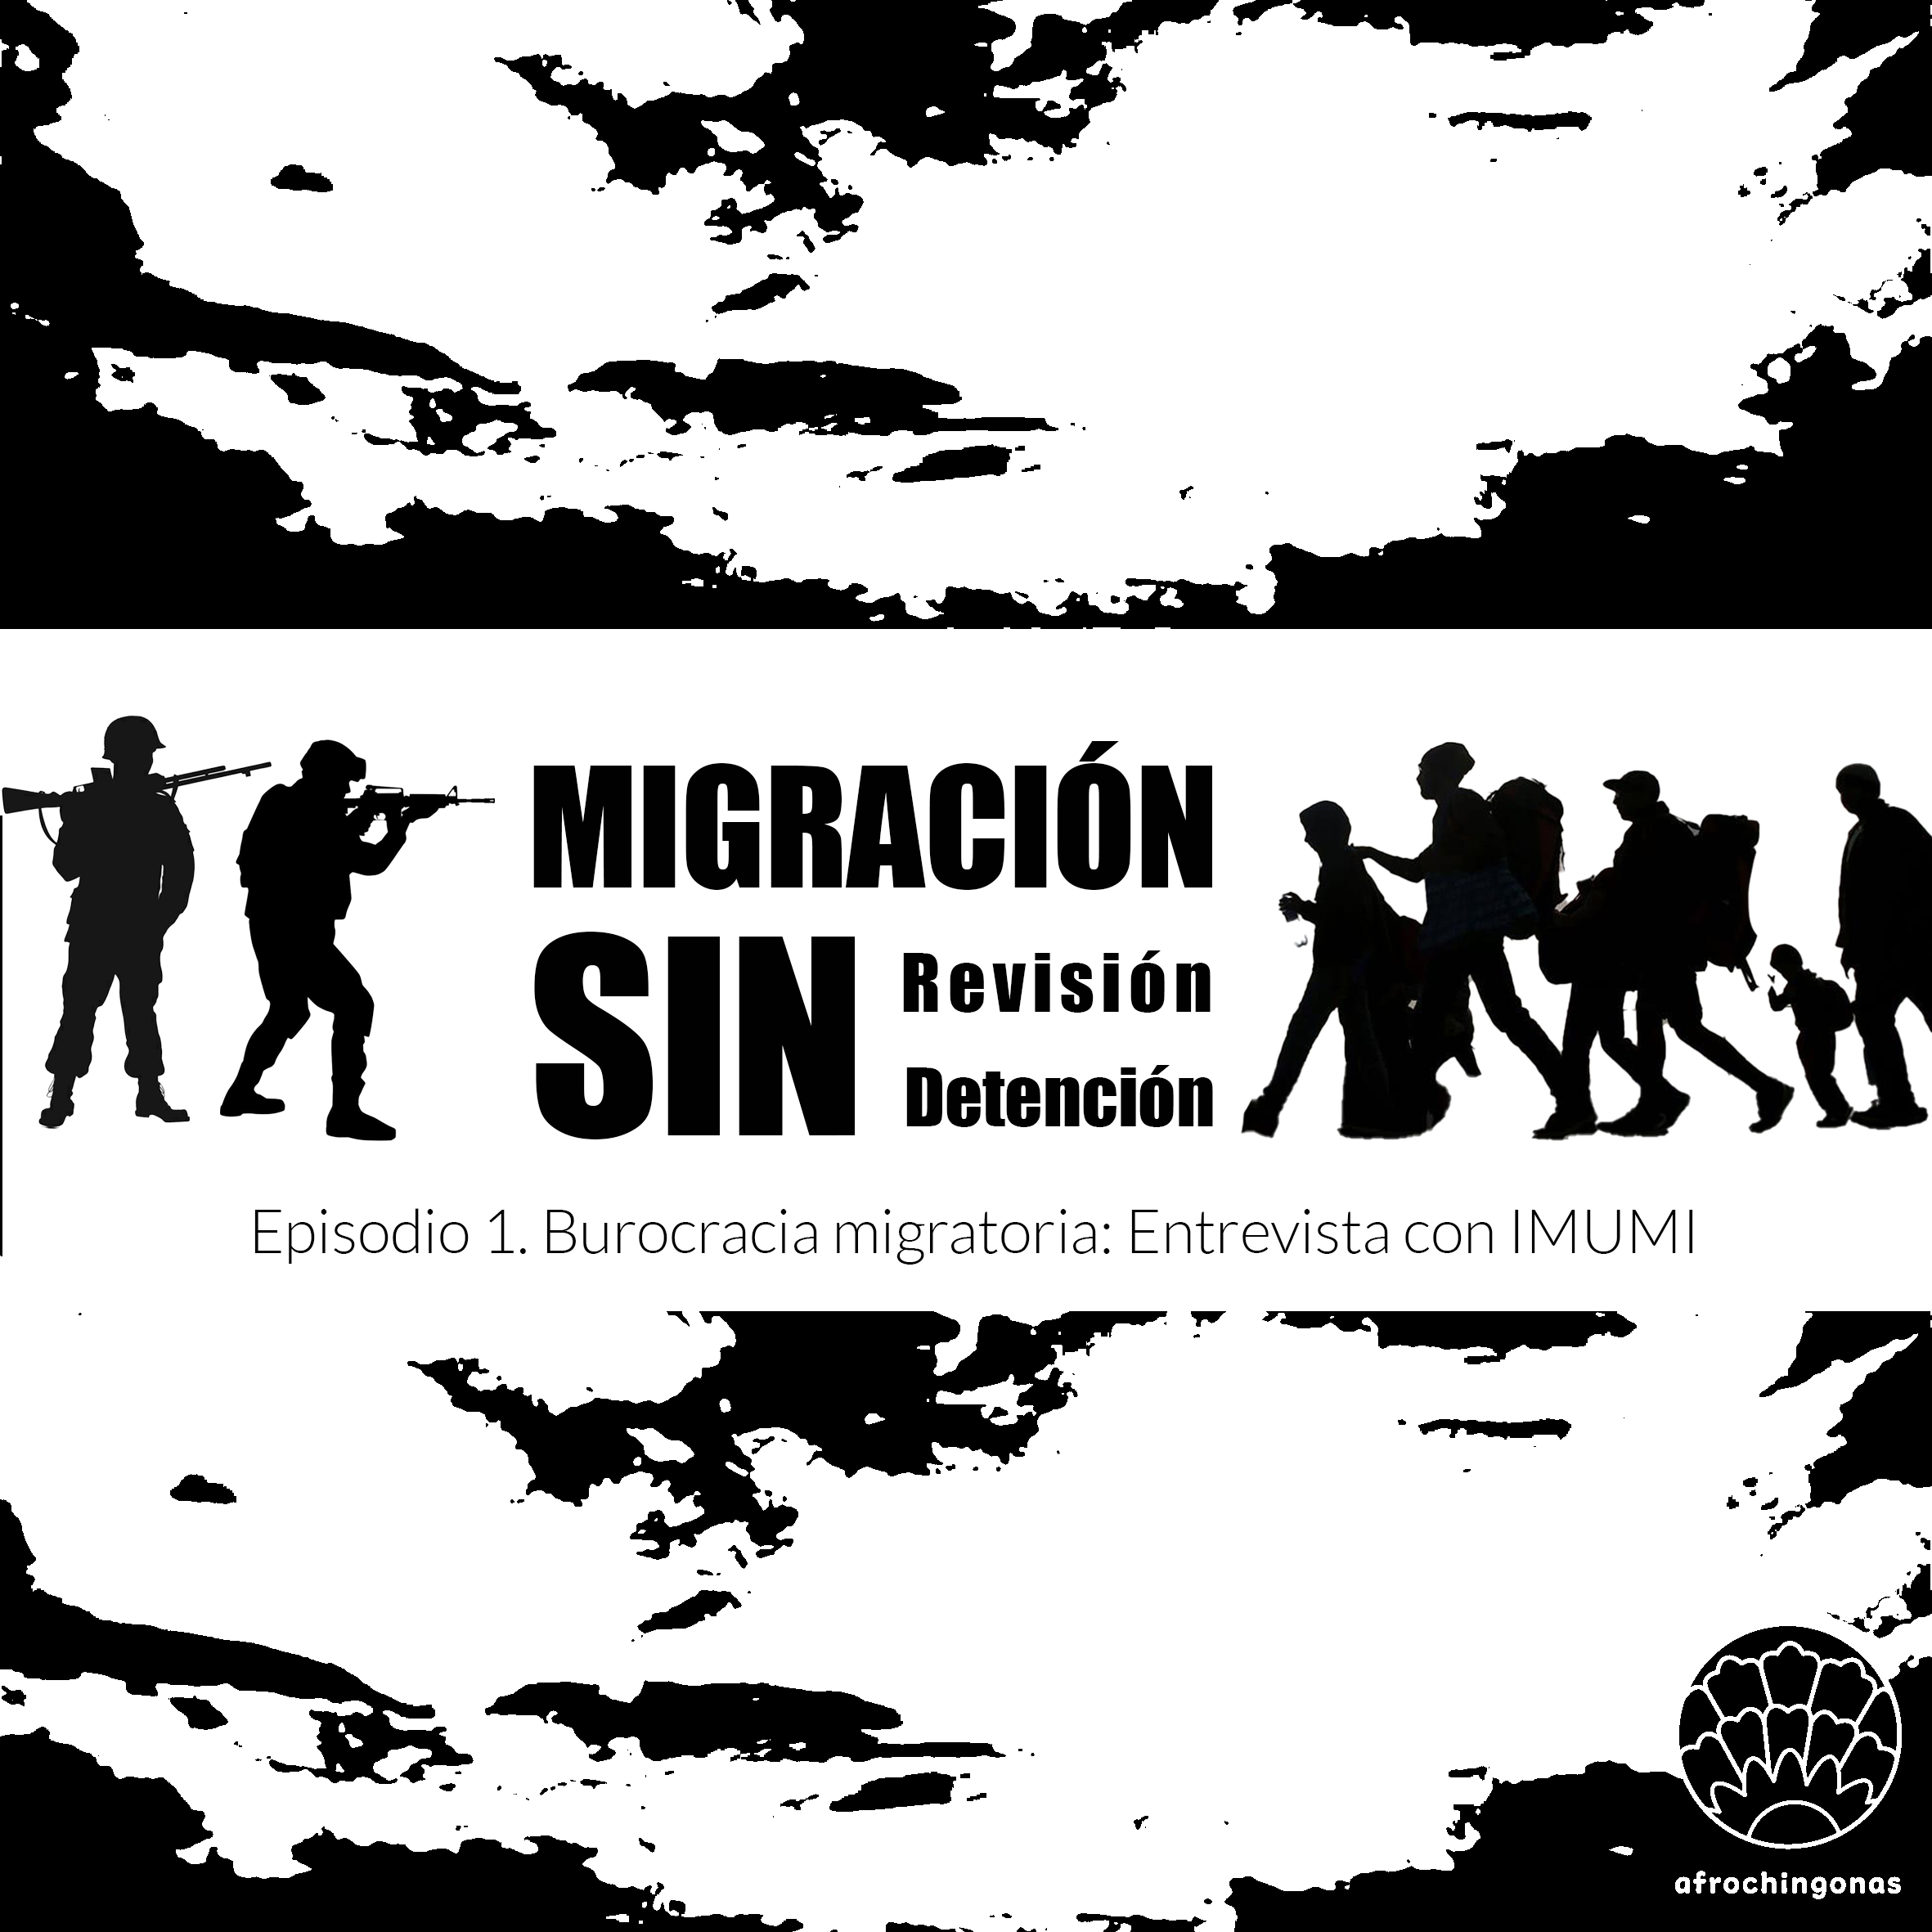 Burocracia migratoria: Entrevista con IMUMI